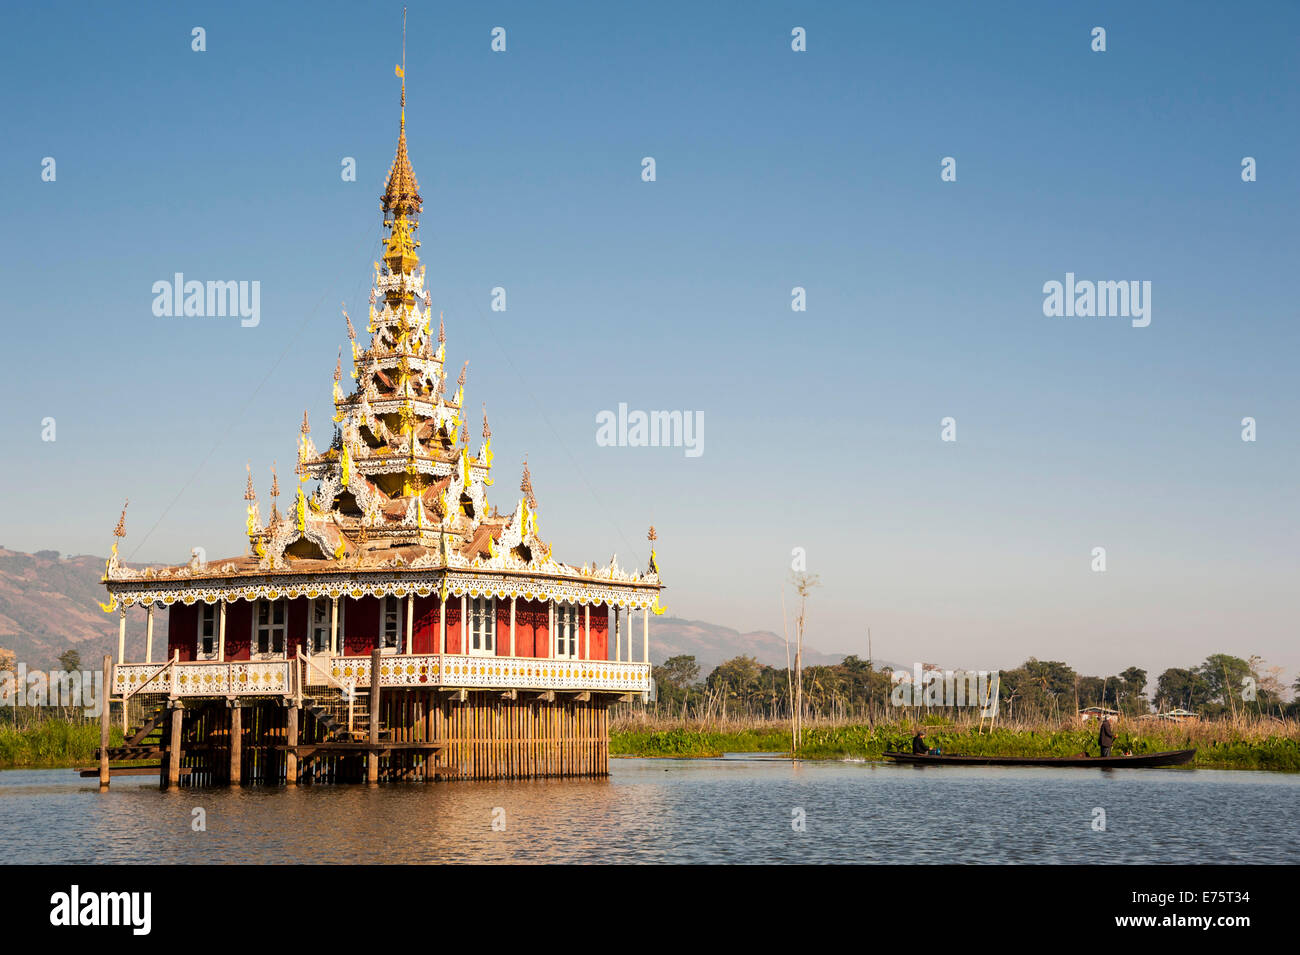 Tempel in Wasser, Inle-See, Shan State in Myanmar Stockfoto